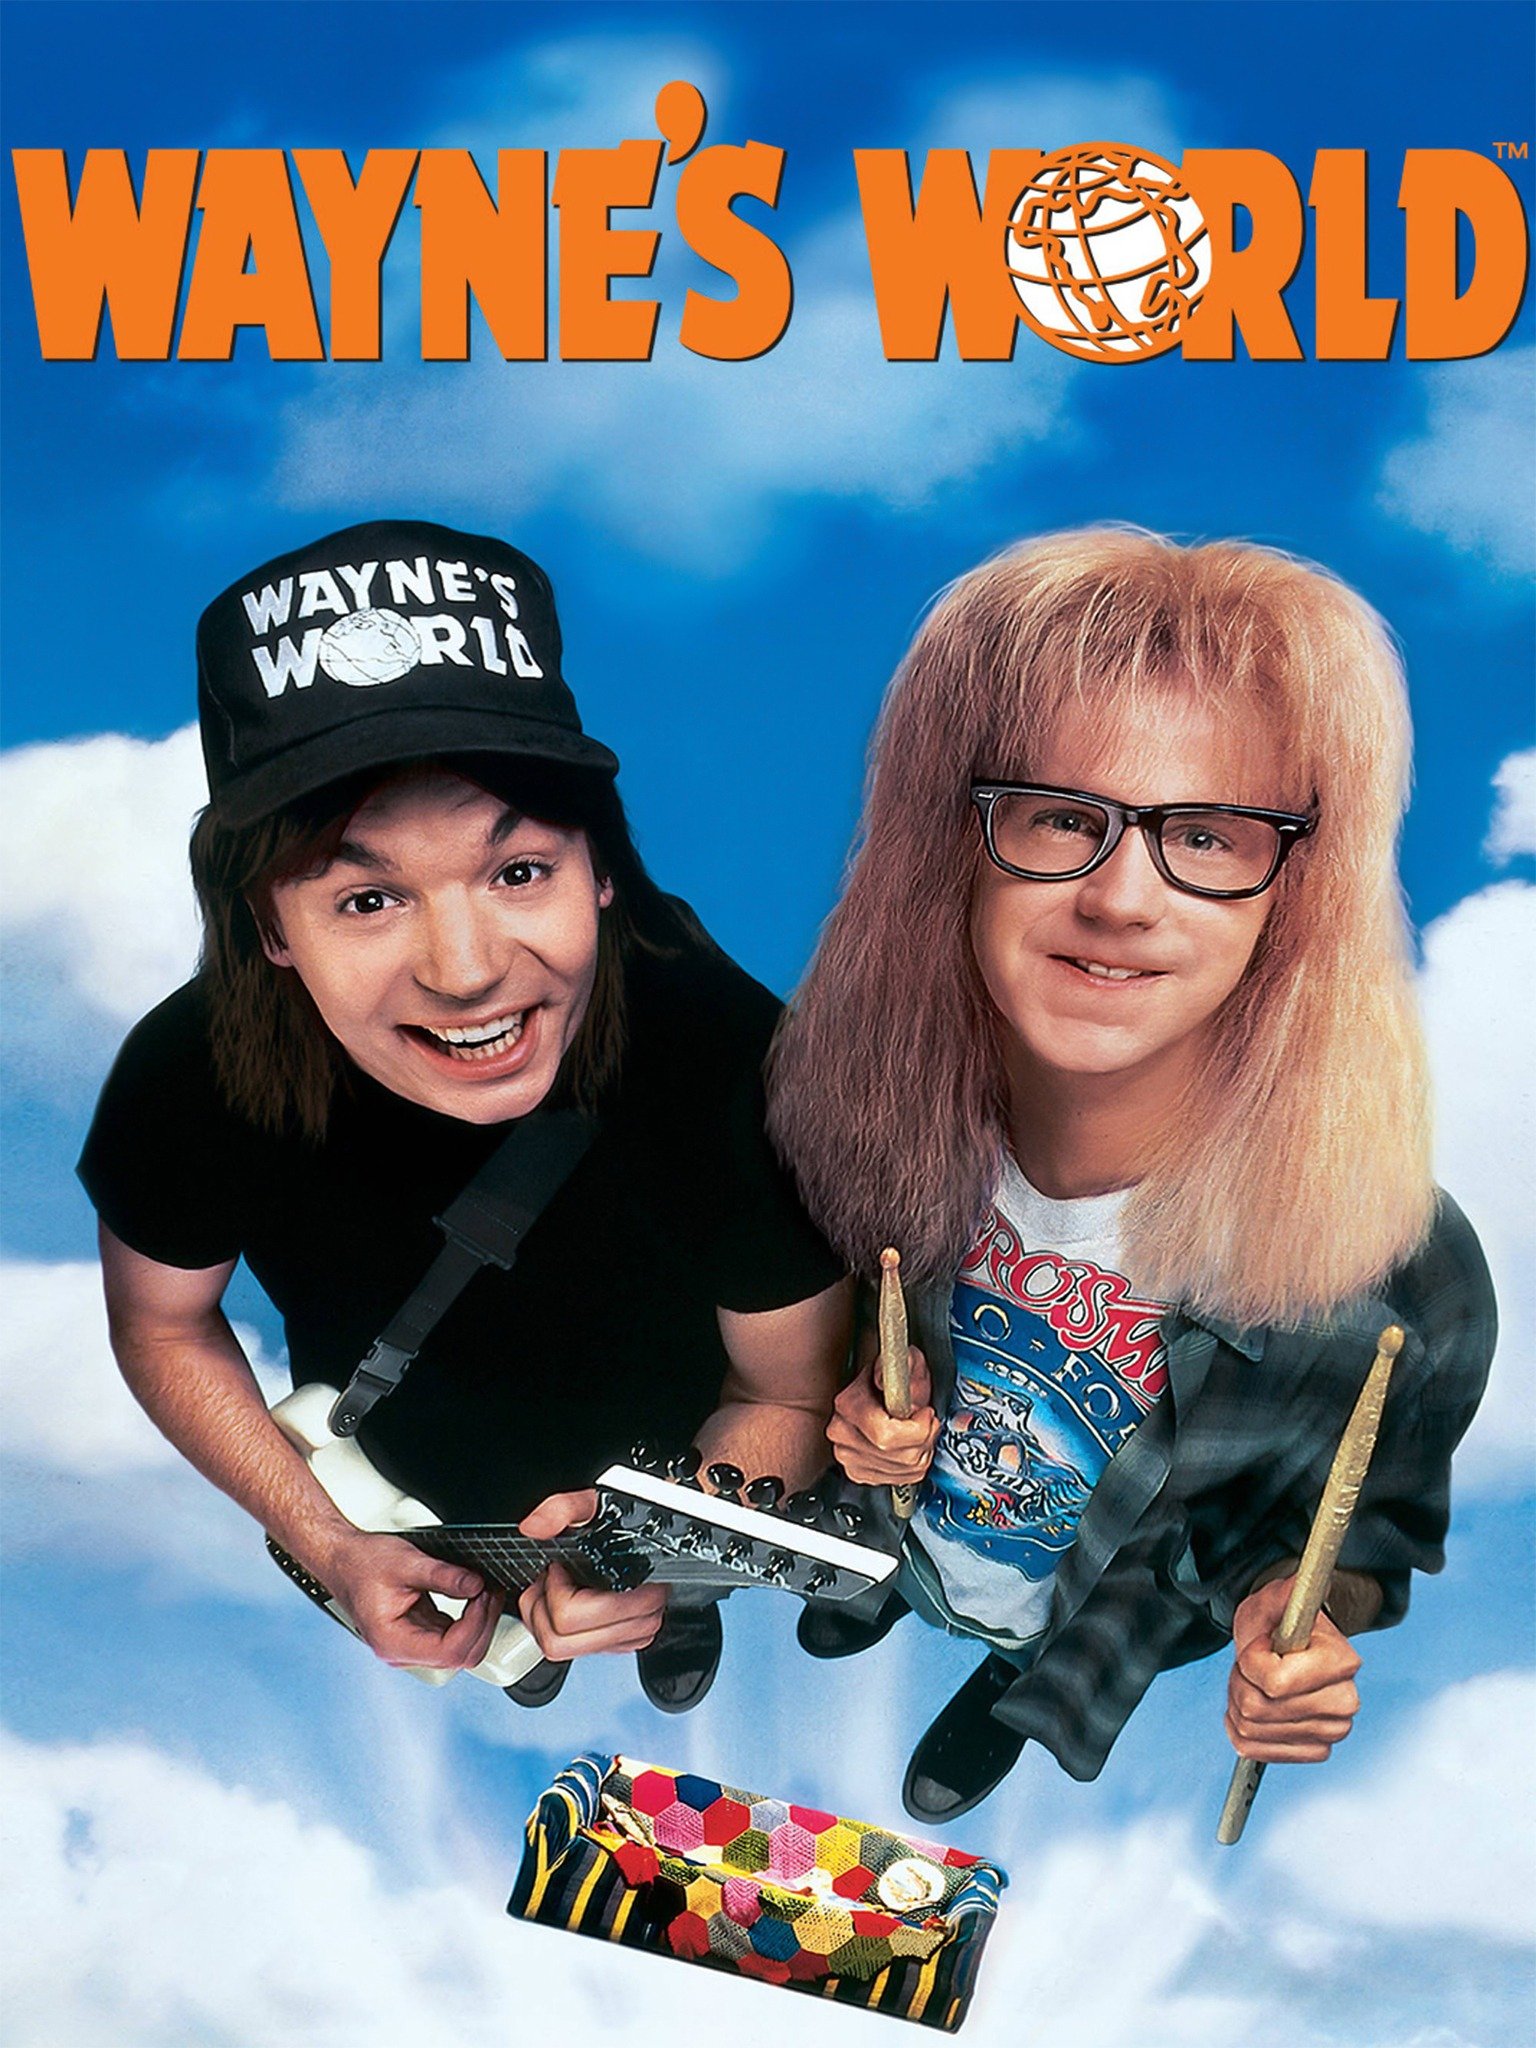 Wayne's World Trailer 1 Trailers & Videos Rotten Tomatoes